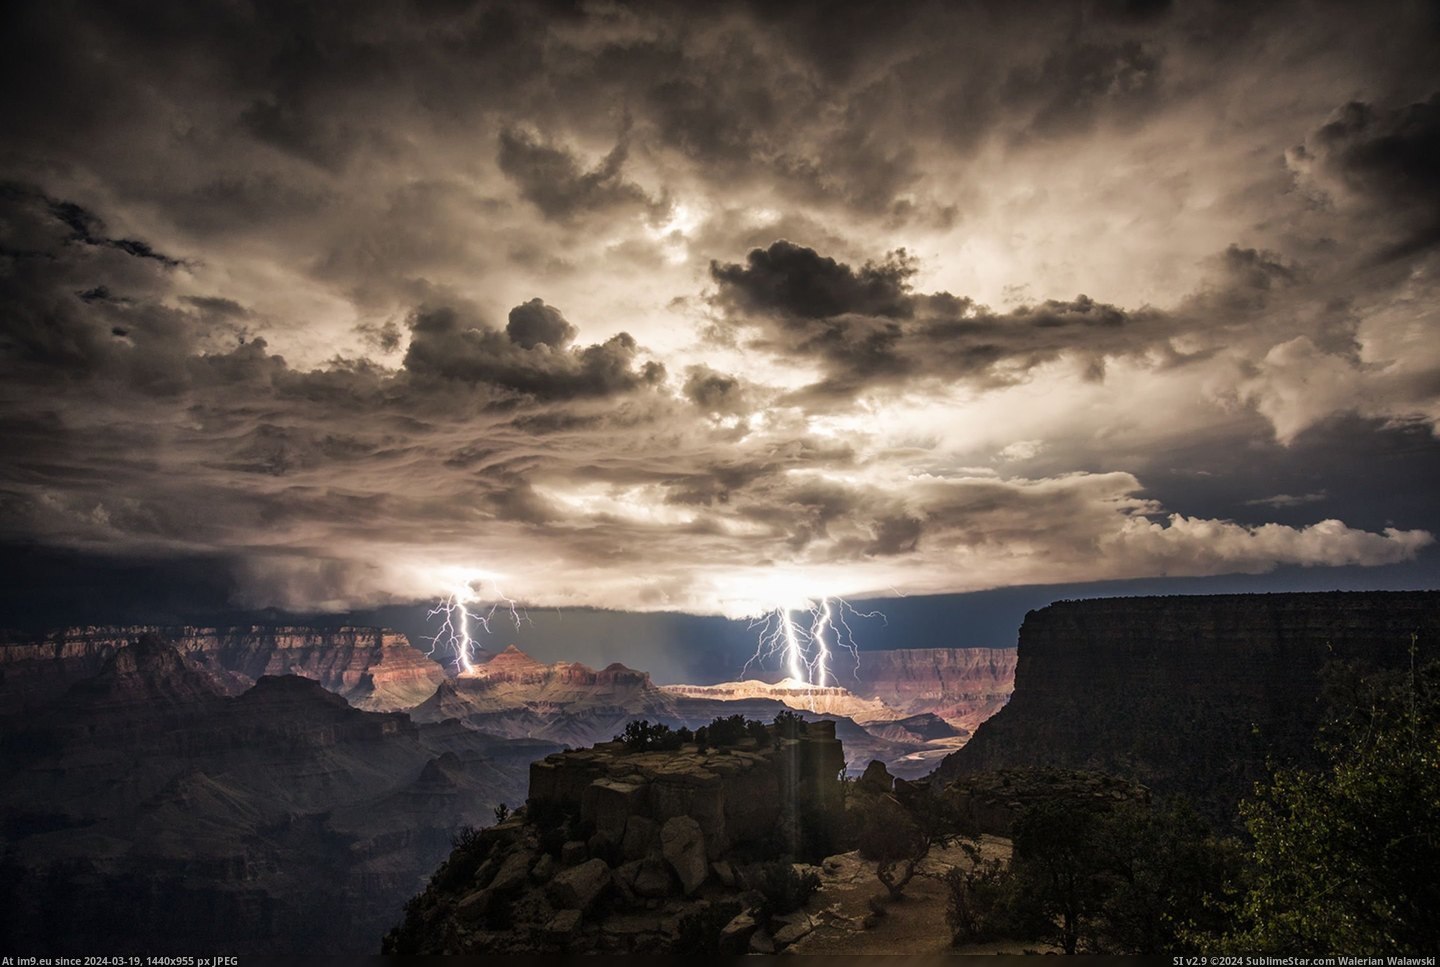 #Canyon #Thunderstorm #Nighttime #Grand [Pics] Nighttime thunderstorm over the Grand Canyon Pic. (Bild von album My r/PICS favs))